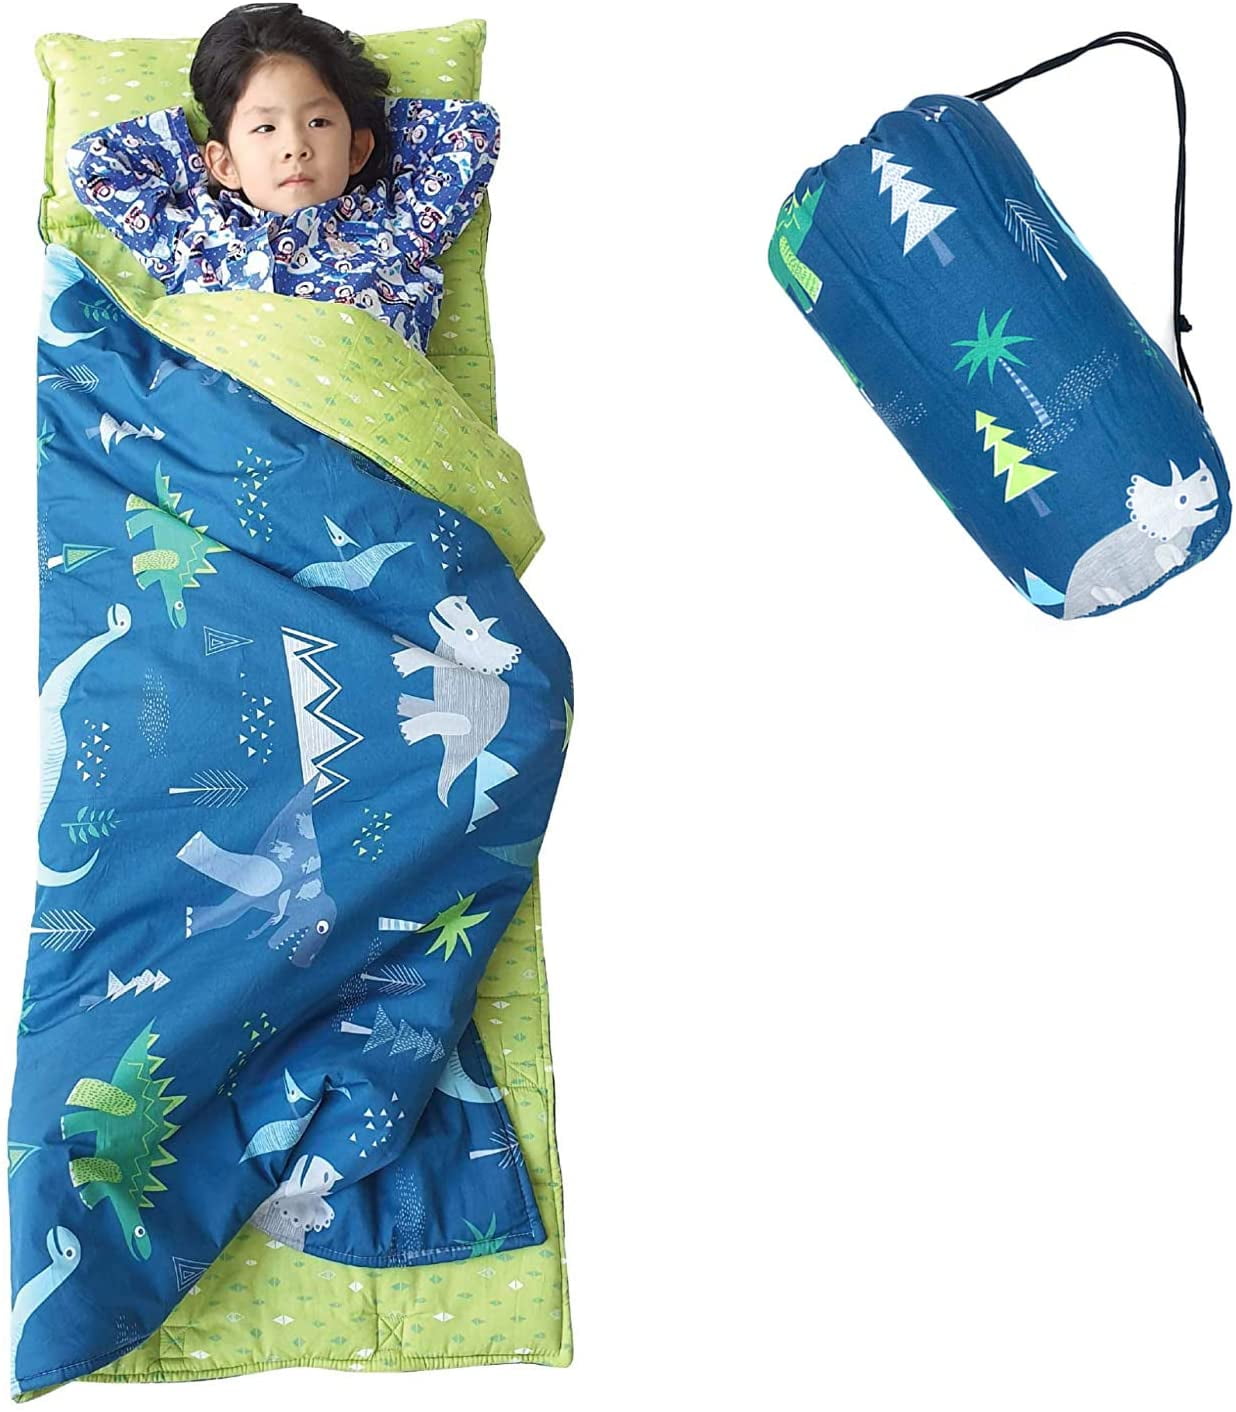 Pillow for Boys or Girls Baby Elephant Toddler Nap Mats for Preschool Kinder Daycare Foldable Comfy Cover Blanket